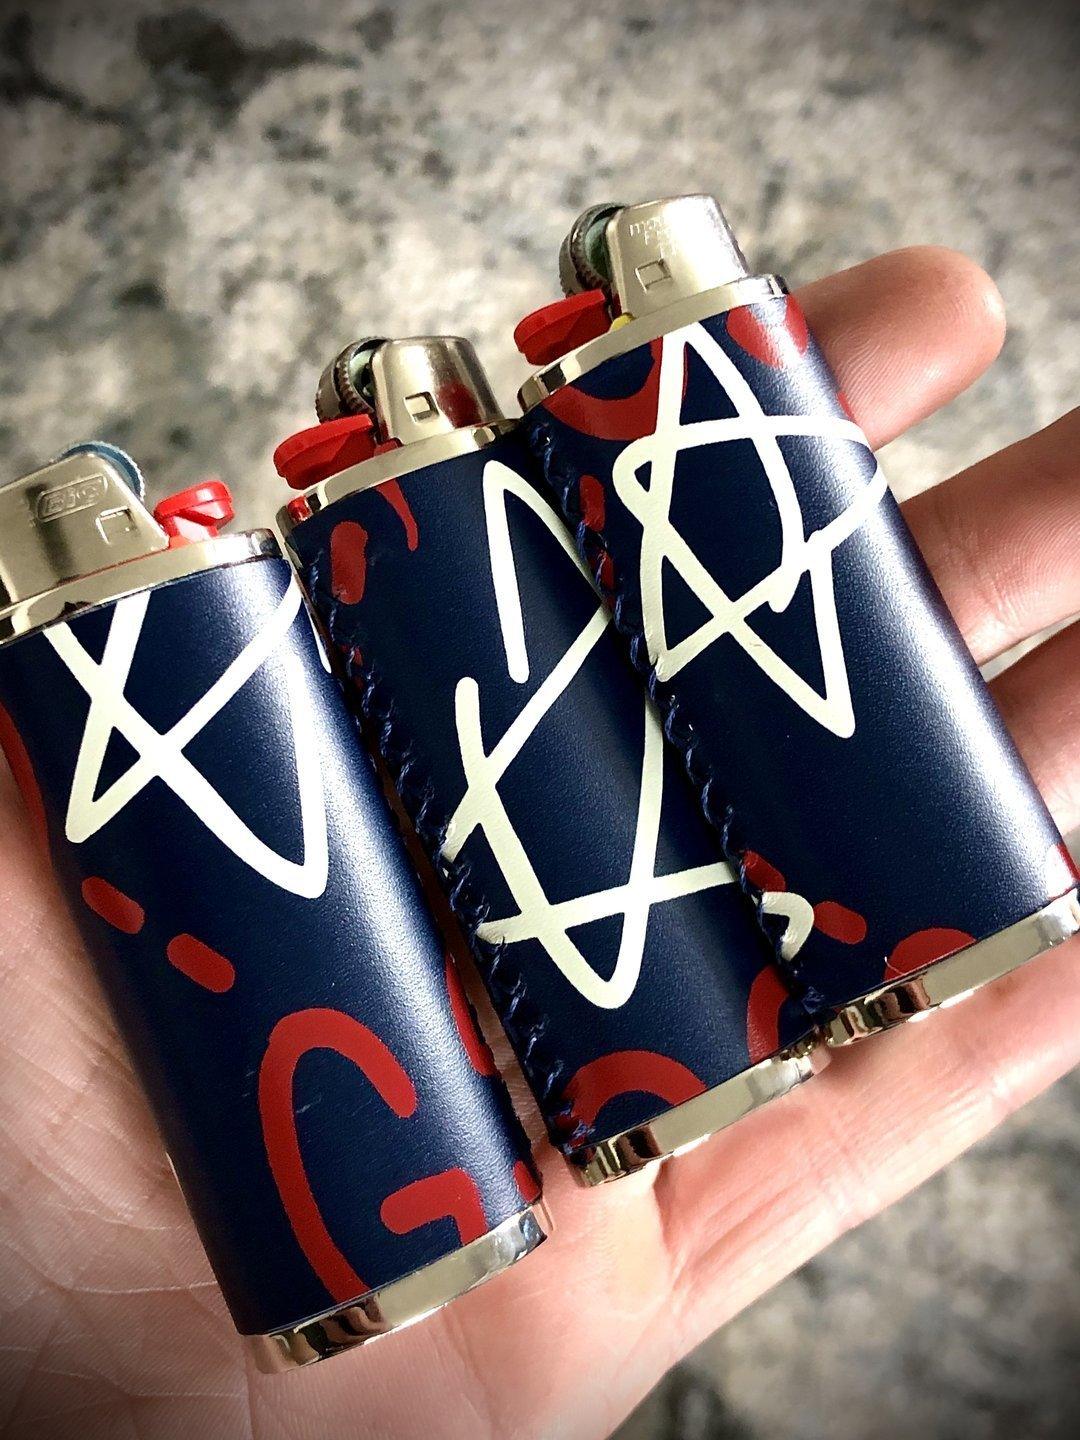 DIY Louis Vuitton lighter case - How to make your own designer lighter case!  